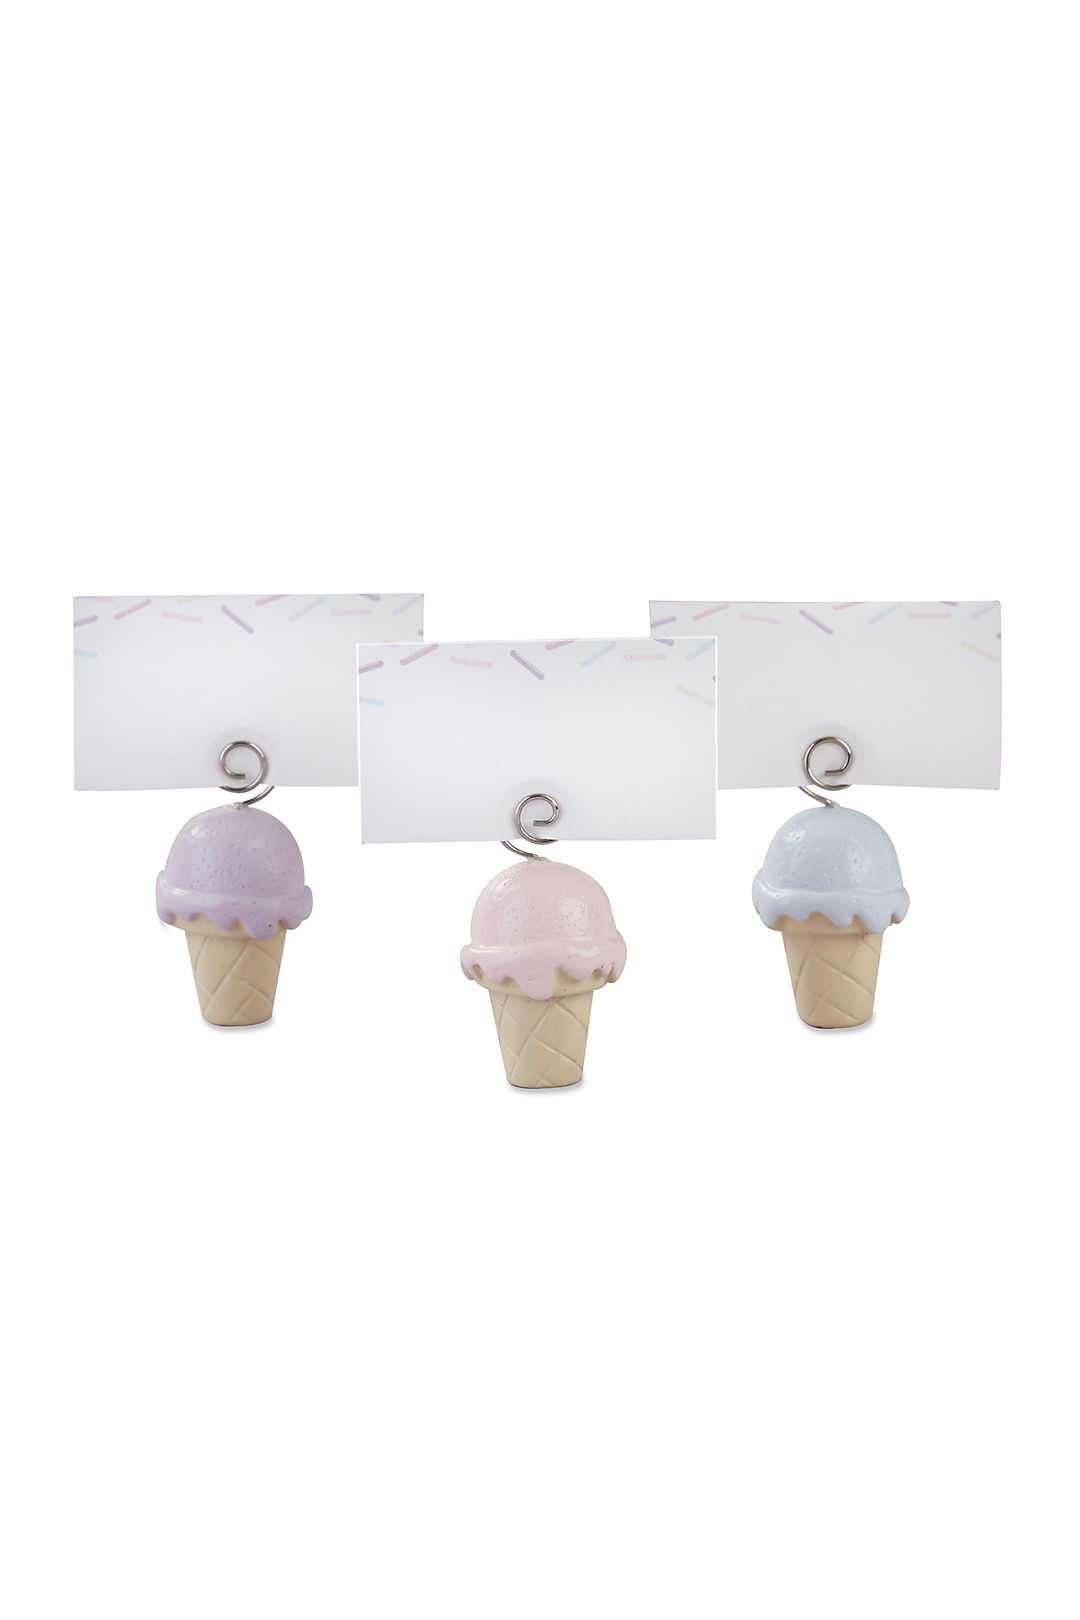 Ice Cream Cone Holders, Cone Holders, 3 Cone Holder, 4 Cone Holder